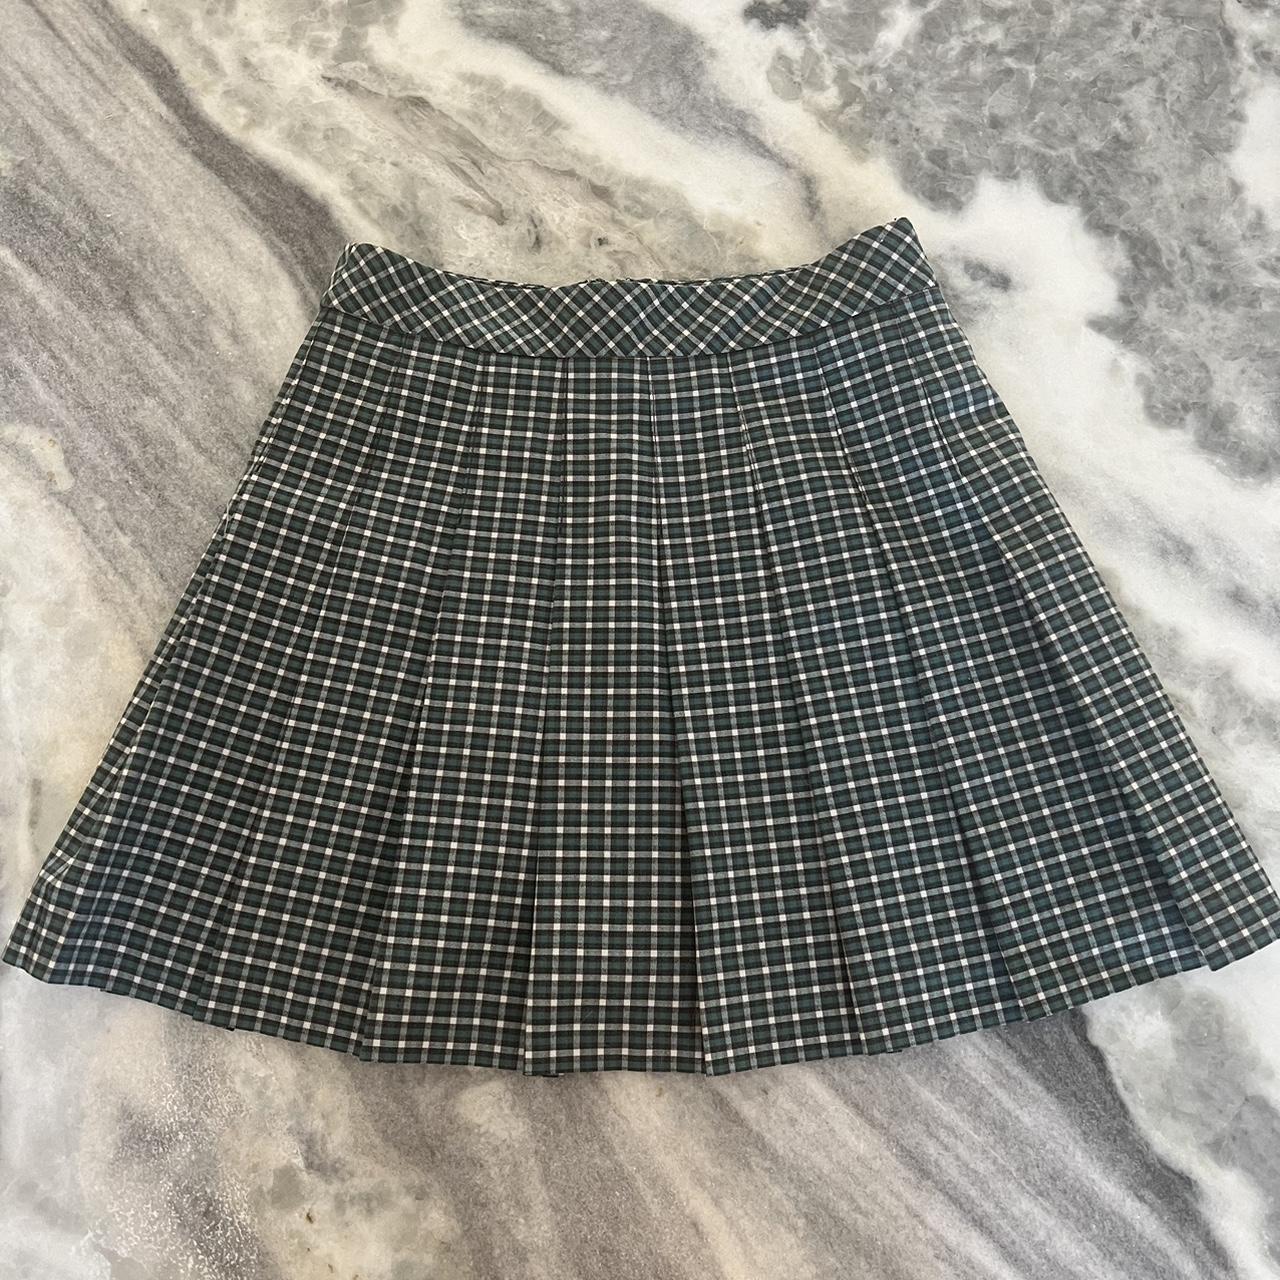 Aritzia Sunday Best plaid skirt. Small tear near... - Depop